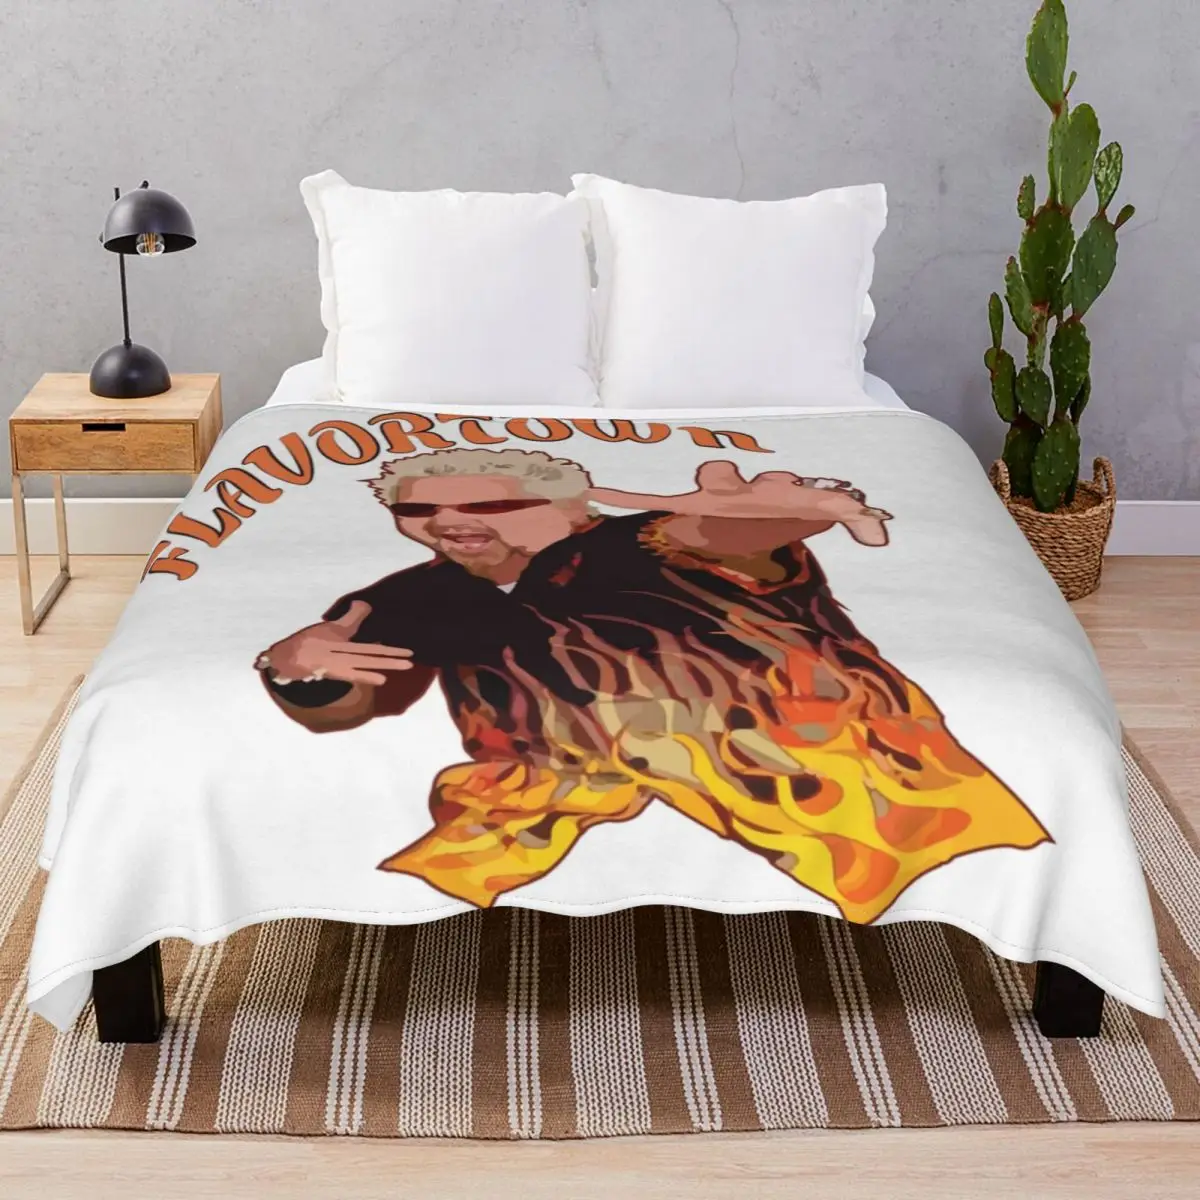 Guy Fieri Flavortown Blankets Fleece Summer Warm Throw Blanket for Bedding Sofa Camp Office